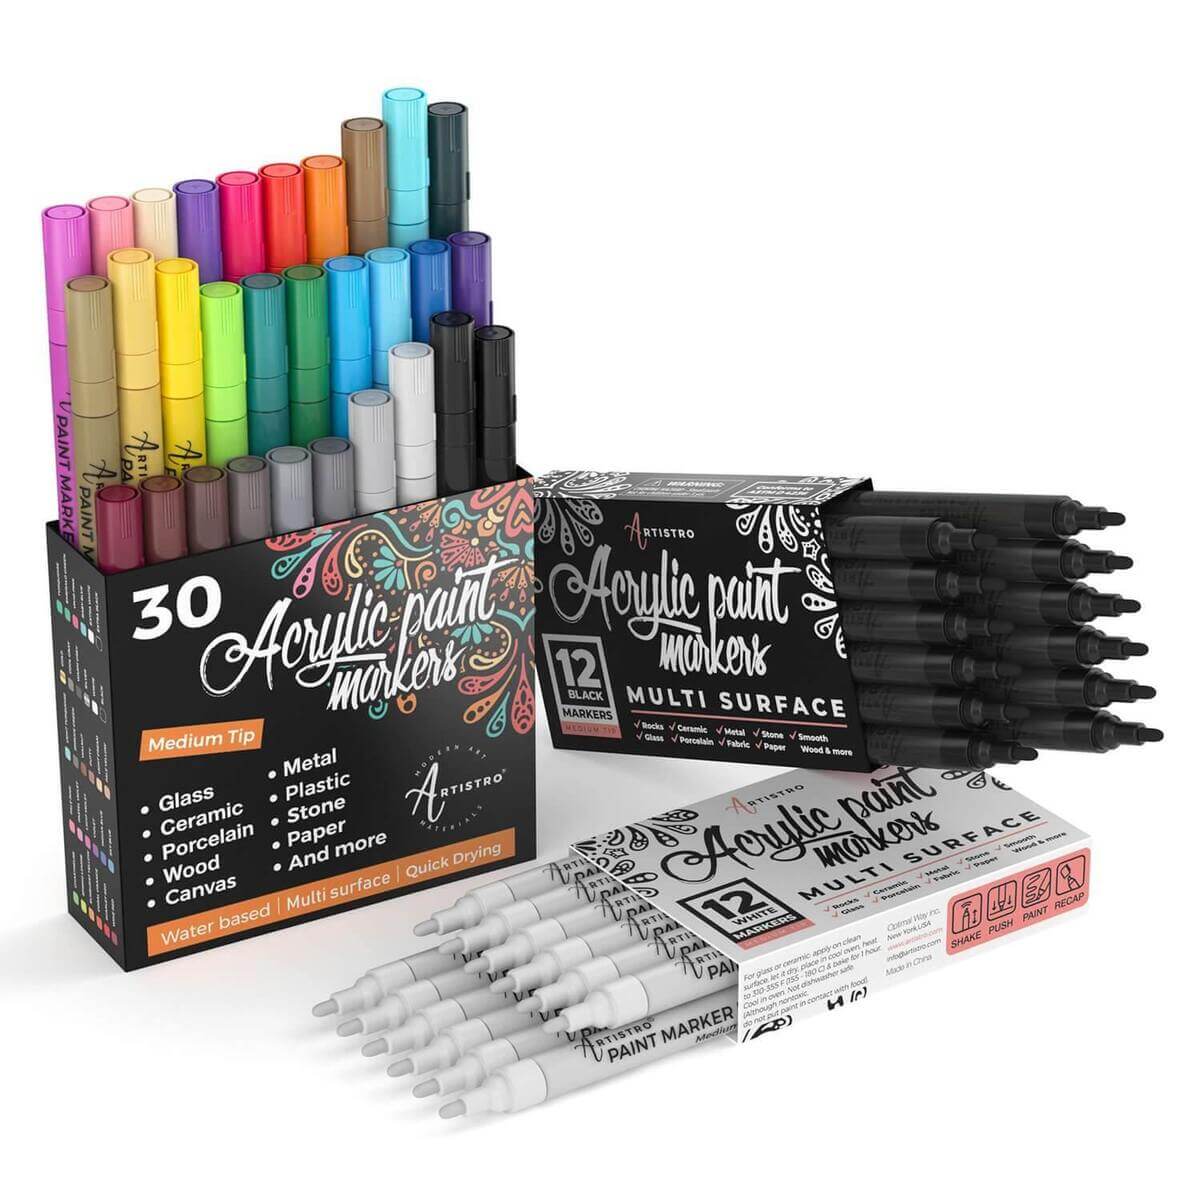 Creativity bundle for kids: 30 medium + 12 glitter + 12 extra fine + 5  extra fine black